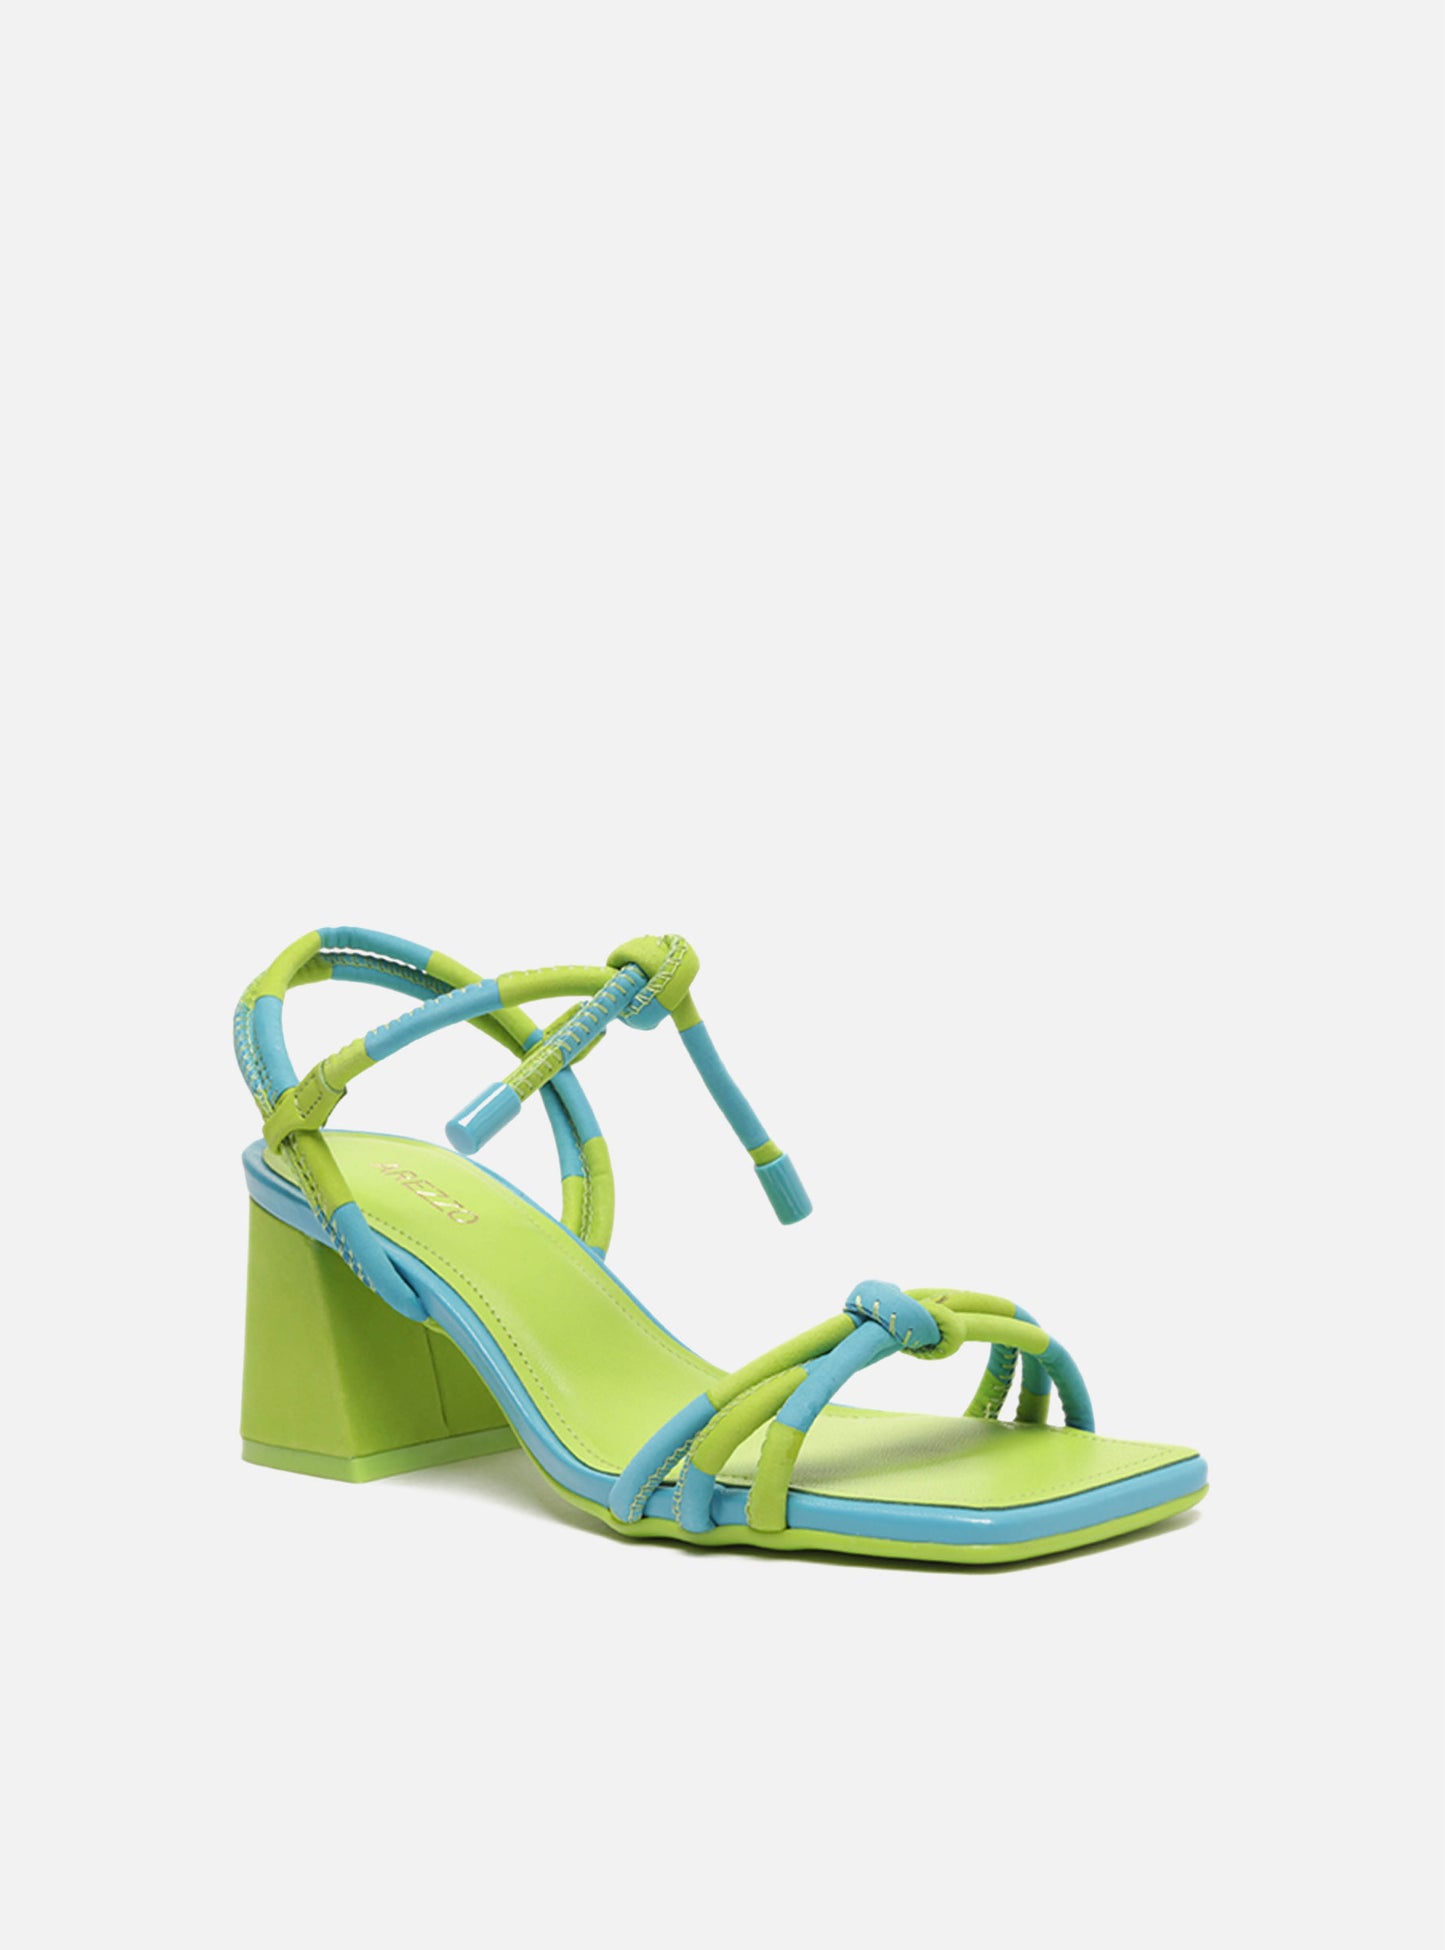 Camila Mid Block Sandal | Green Stylish Comfort